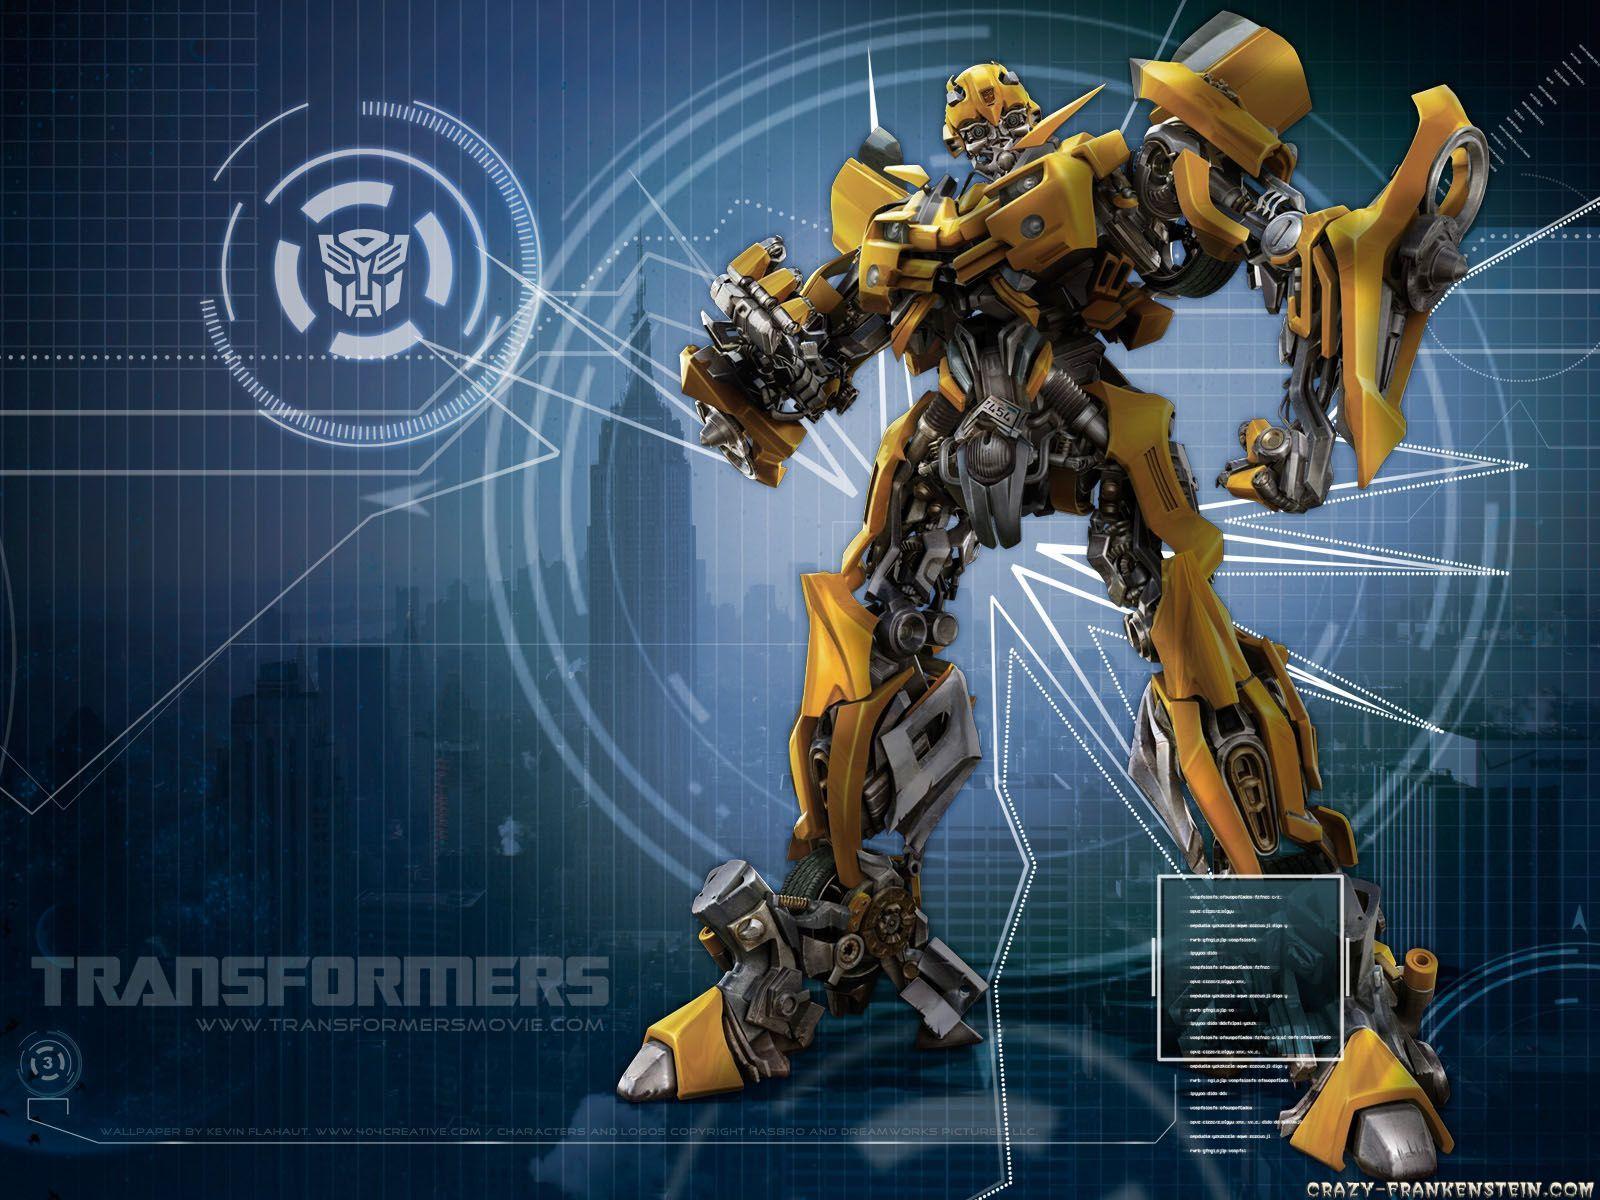 Transformers battle live wallpaper for ansformers. HD Wallpaper